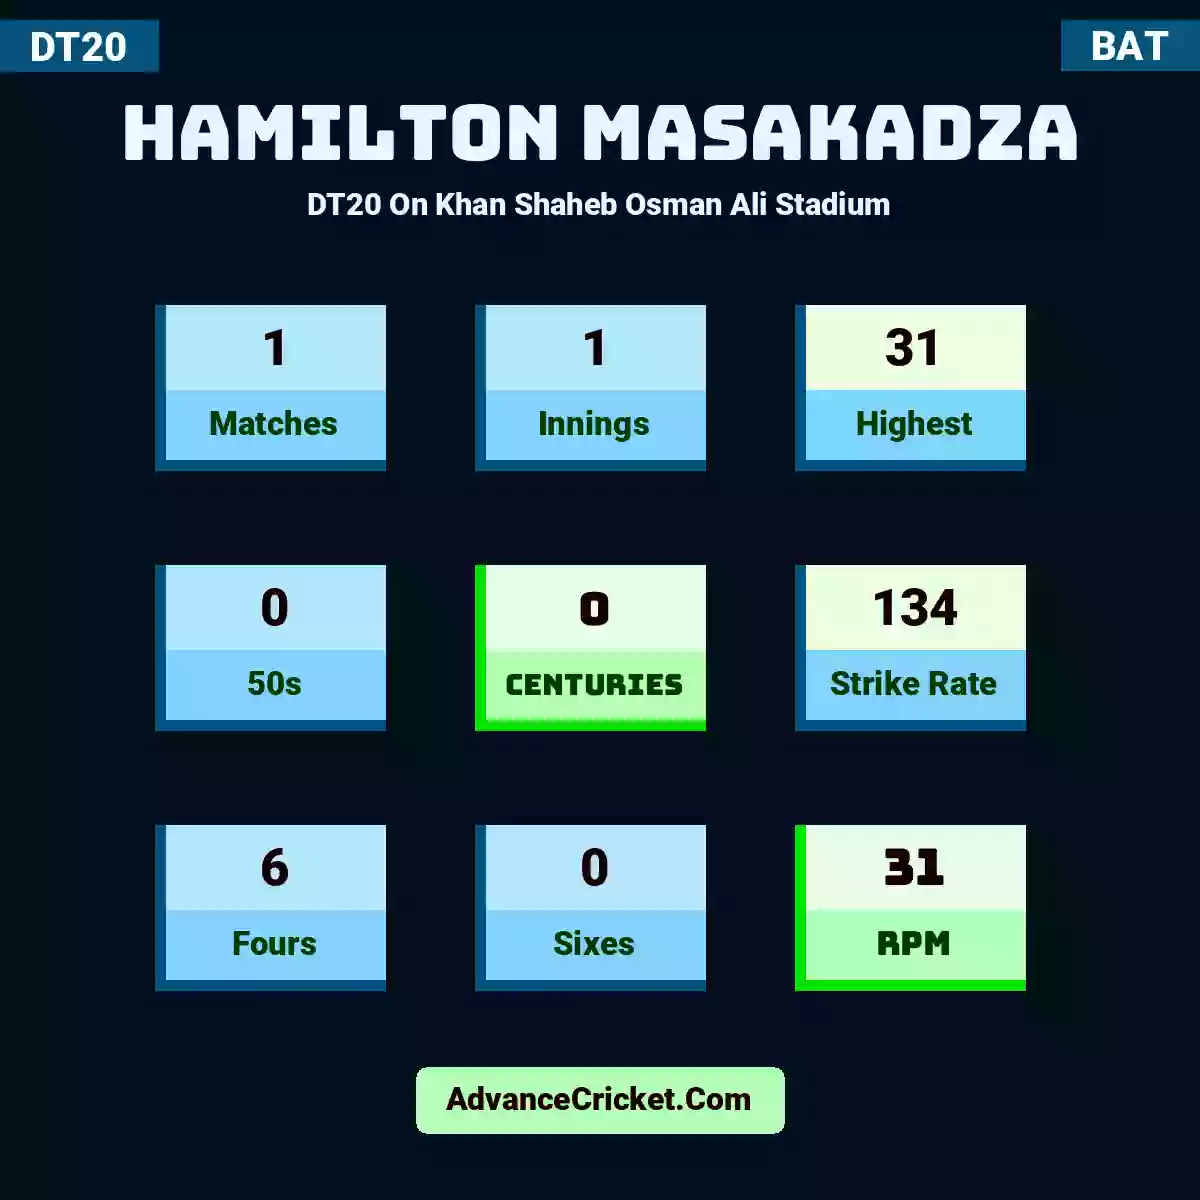 Hamilton Masakadza DT20  On Khan Shaheb Osman Ali Stadium, Hamilton Masakadza played 1 matches, scored 31 runs as highest, 0 half-centuries, and 0 centuries, with a strike rate of 134. H.Masakadza hit 6 fours and 0 sixes, with an RPM of 31.